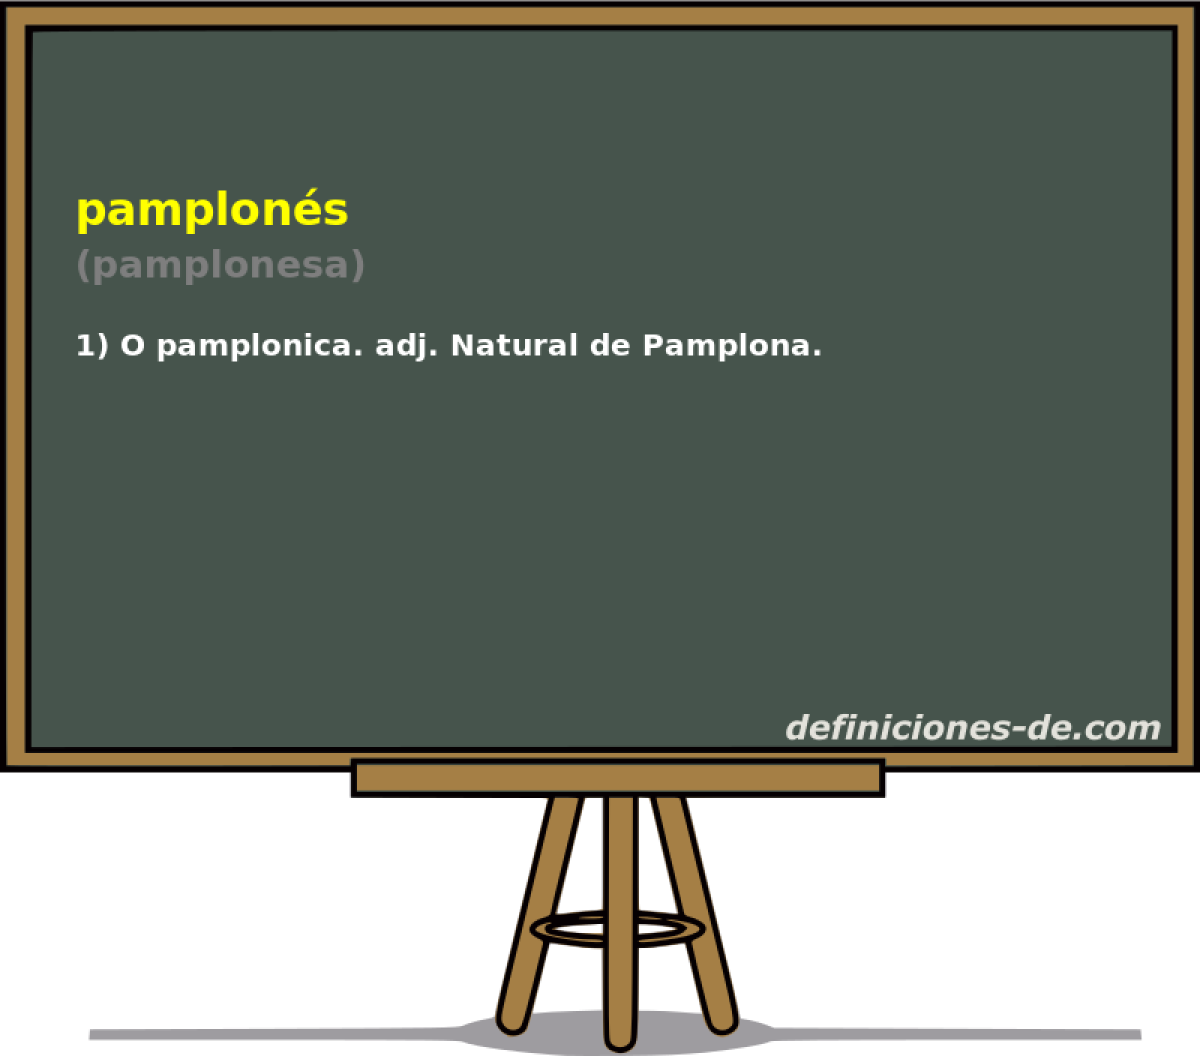 pamplons (pamplonesa)